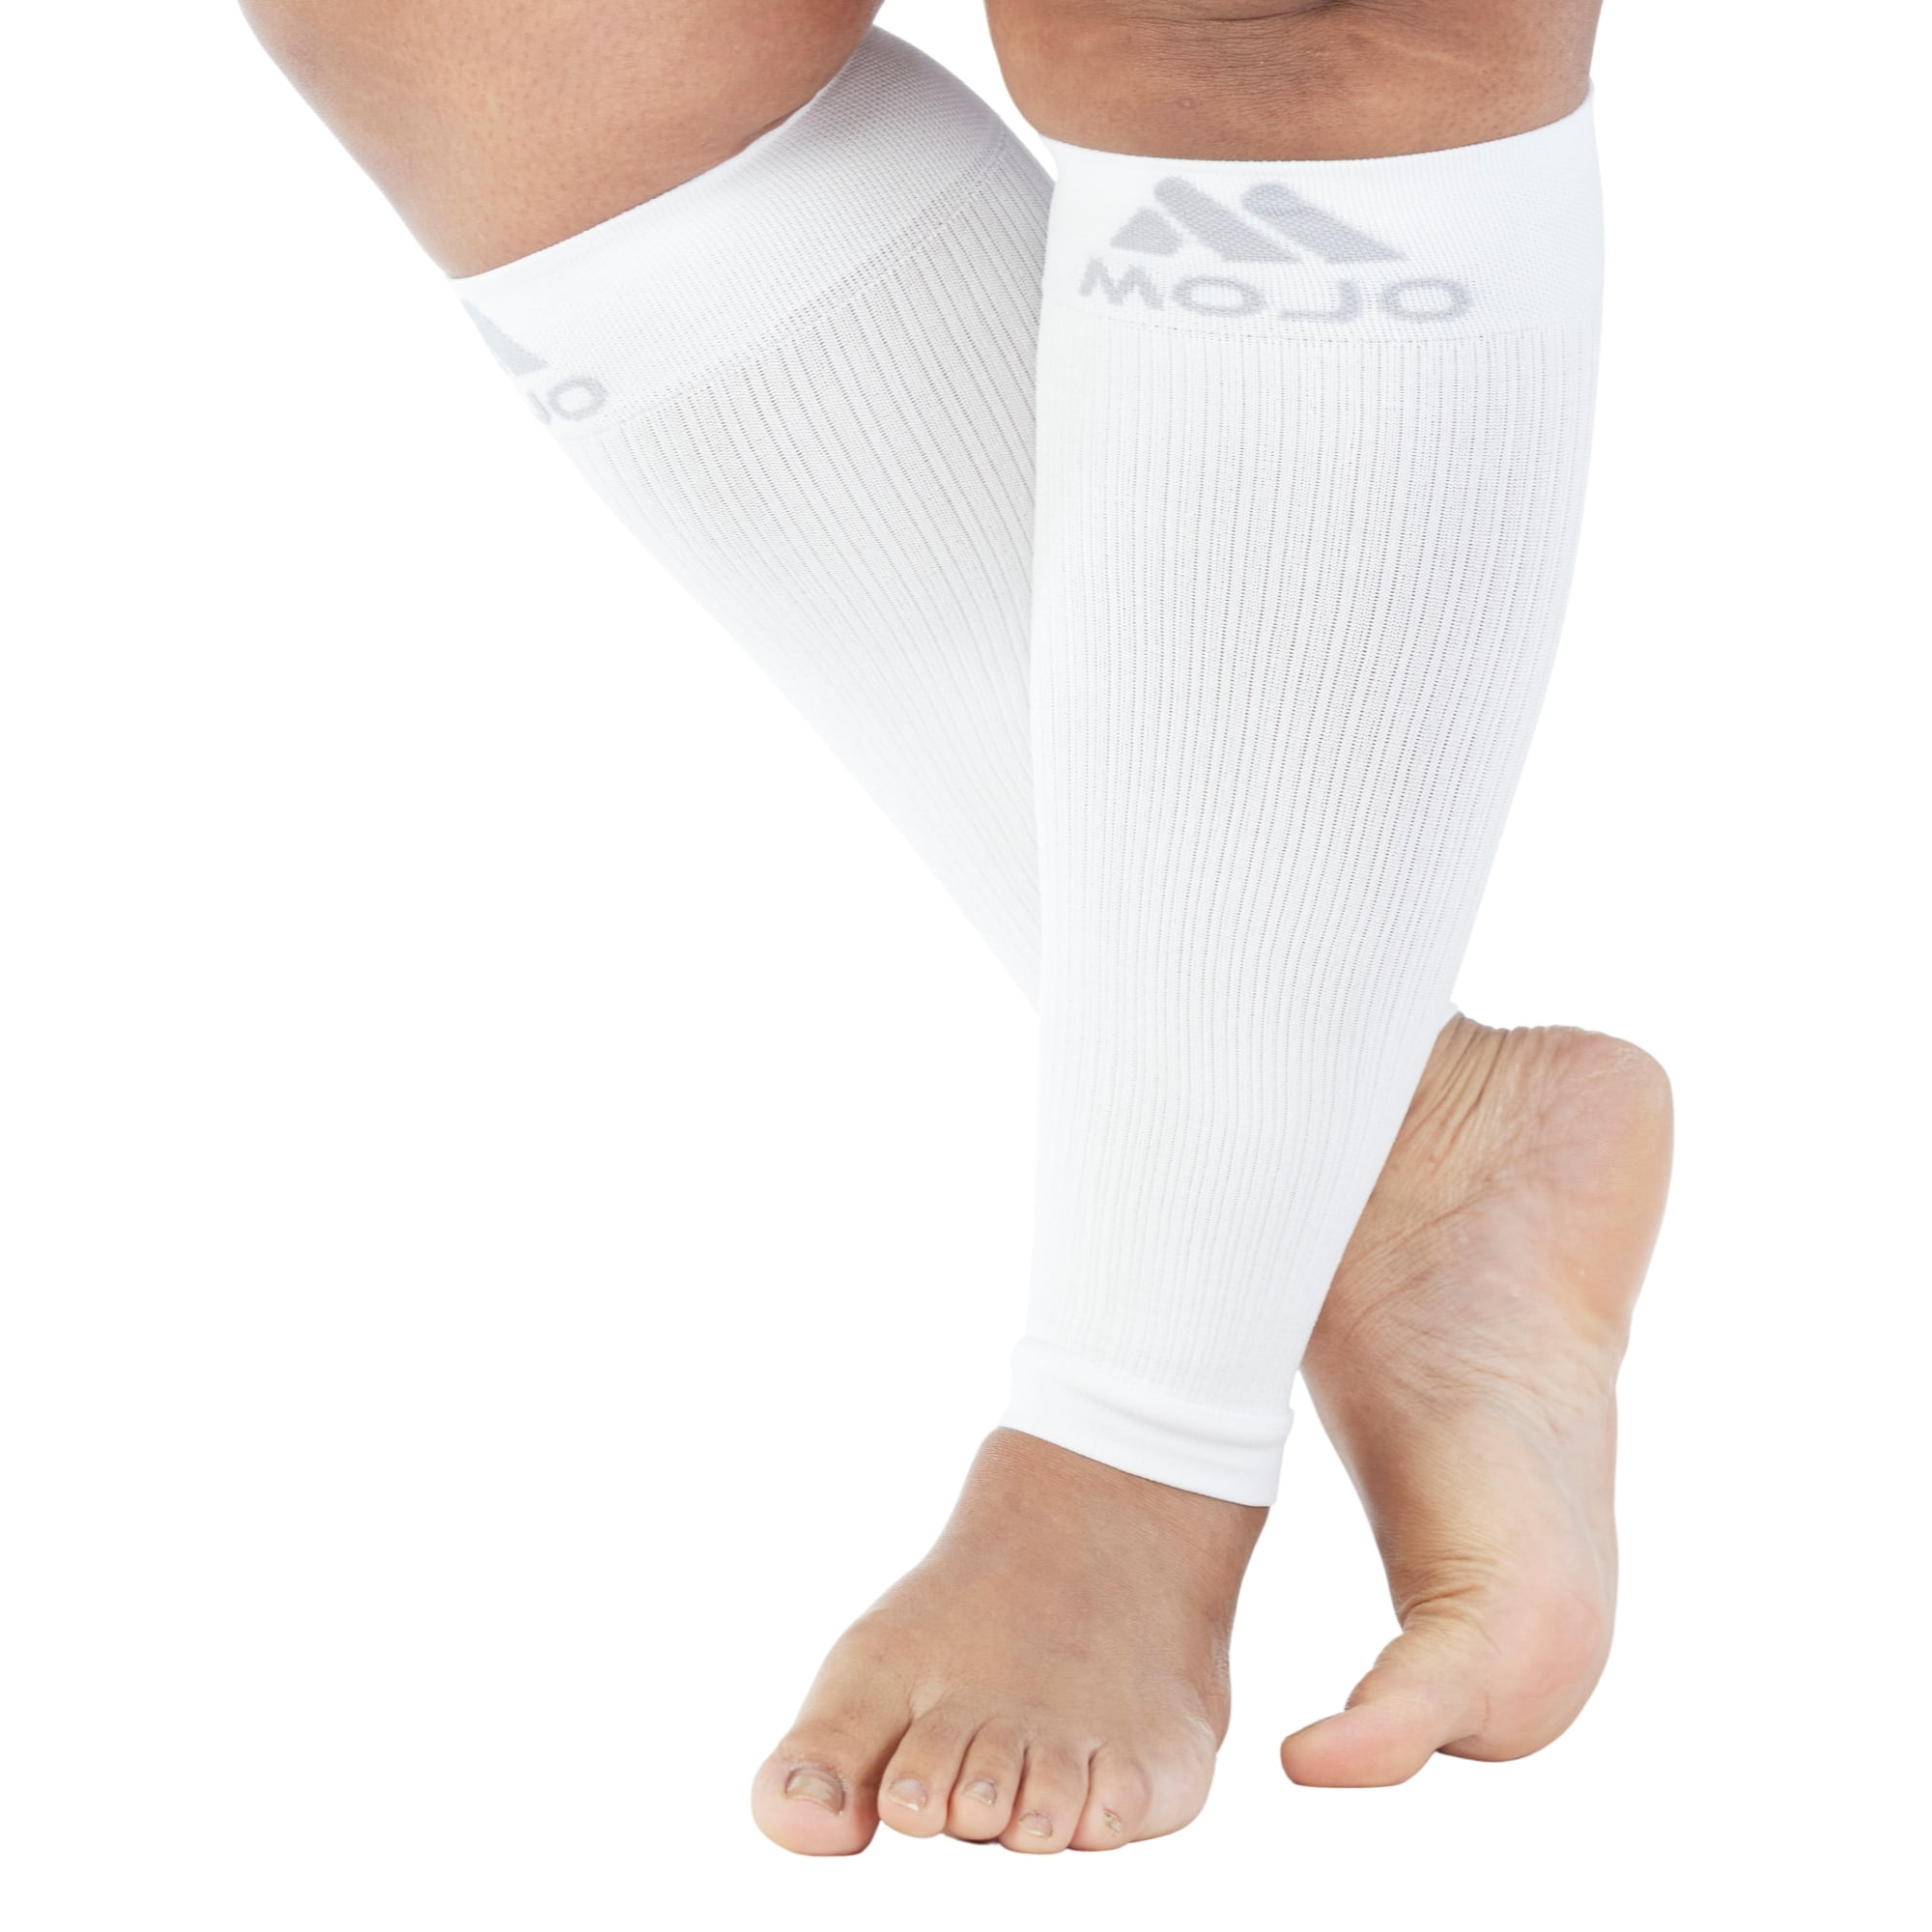 Plus Size Compression Calf Sleeve for Men Women 20-30mmHg - White, 2X-Large - Walmart.com